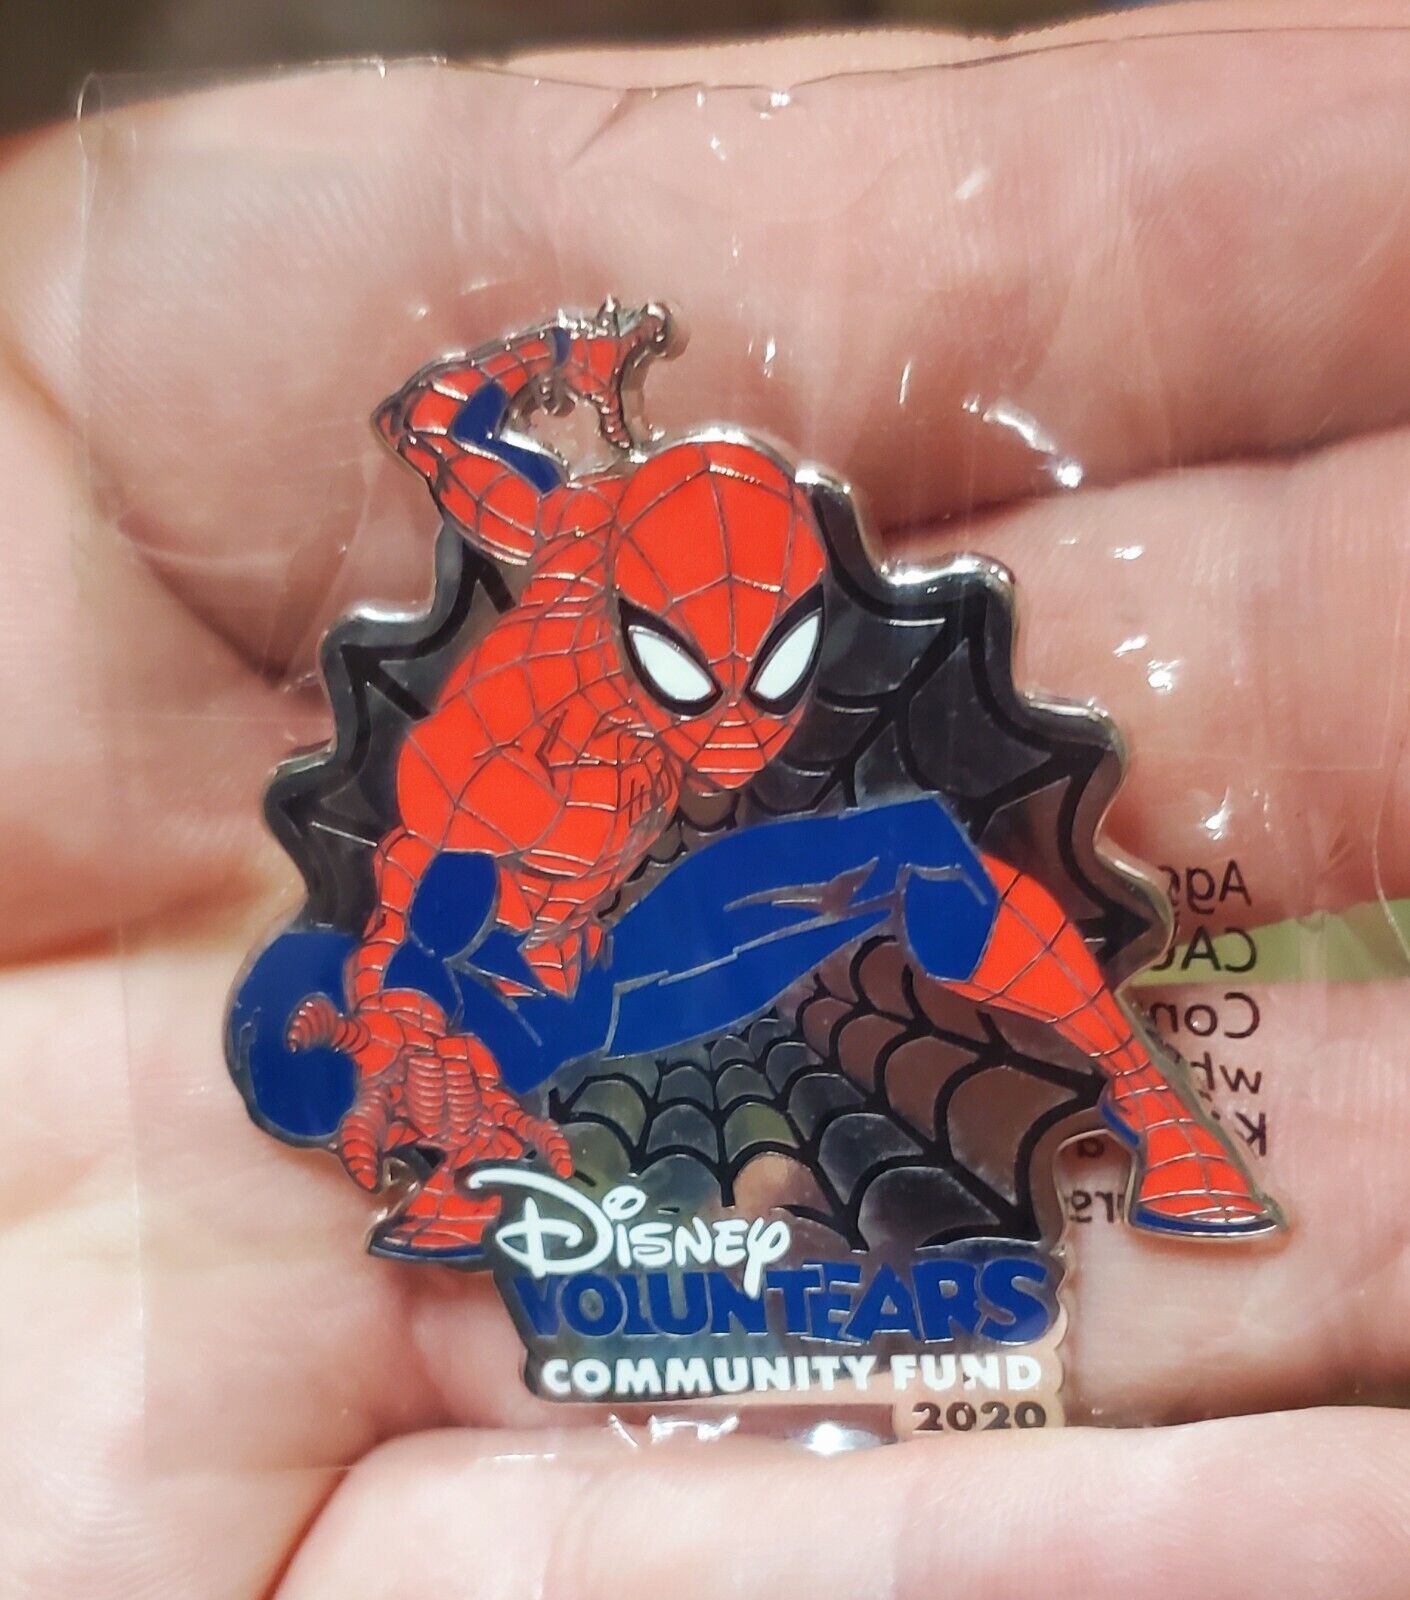 Disney Spiderman 2020 Disney VoluntEars Community Fund Pin